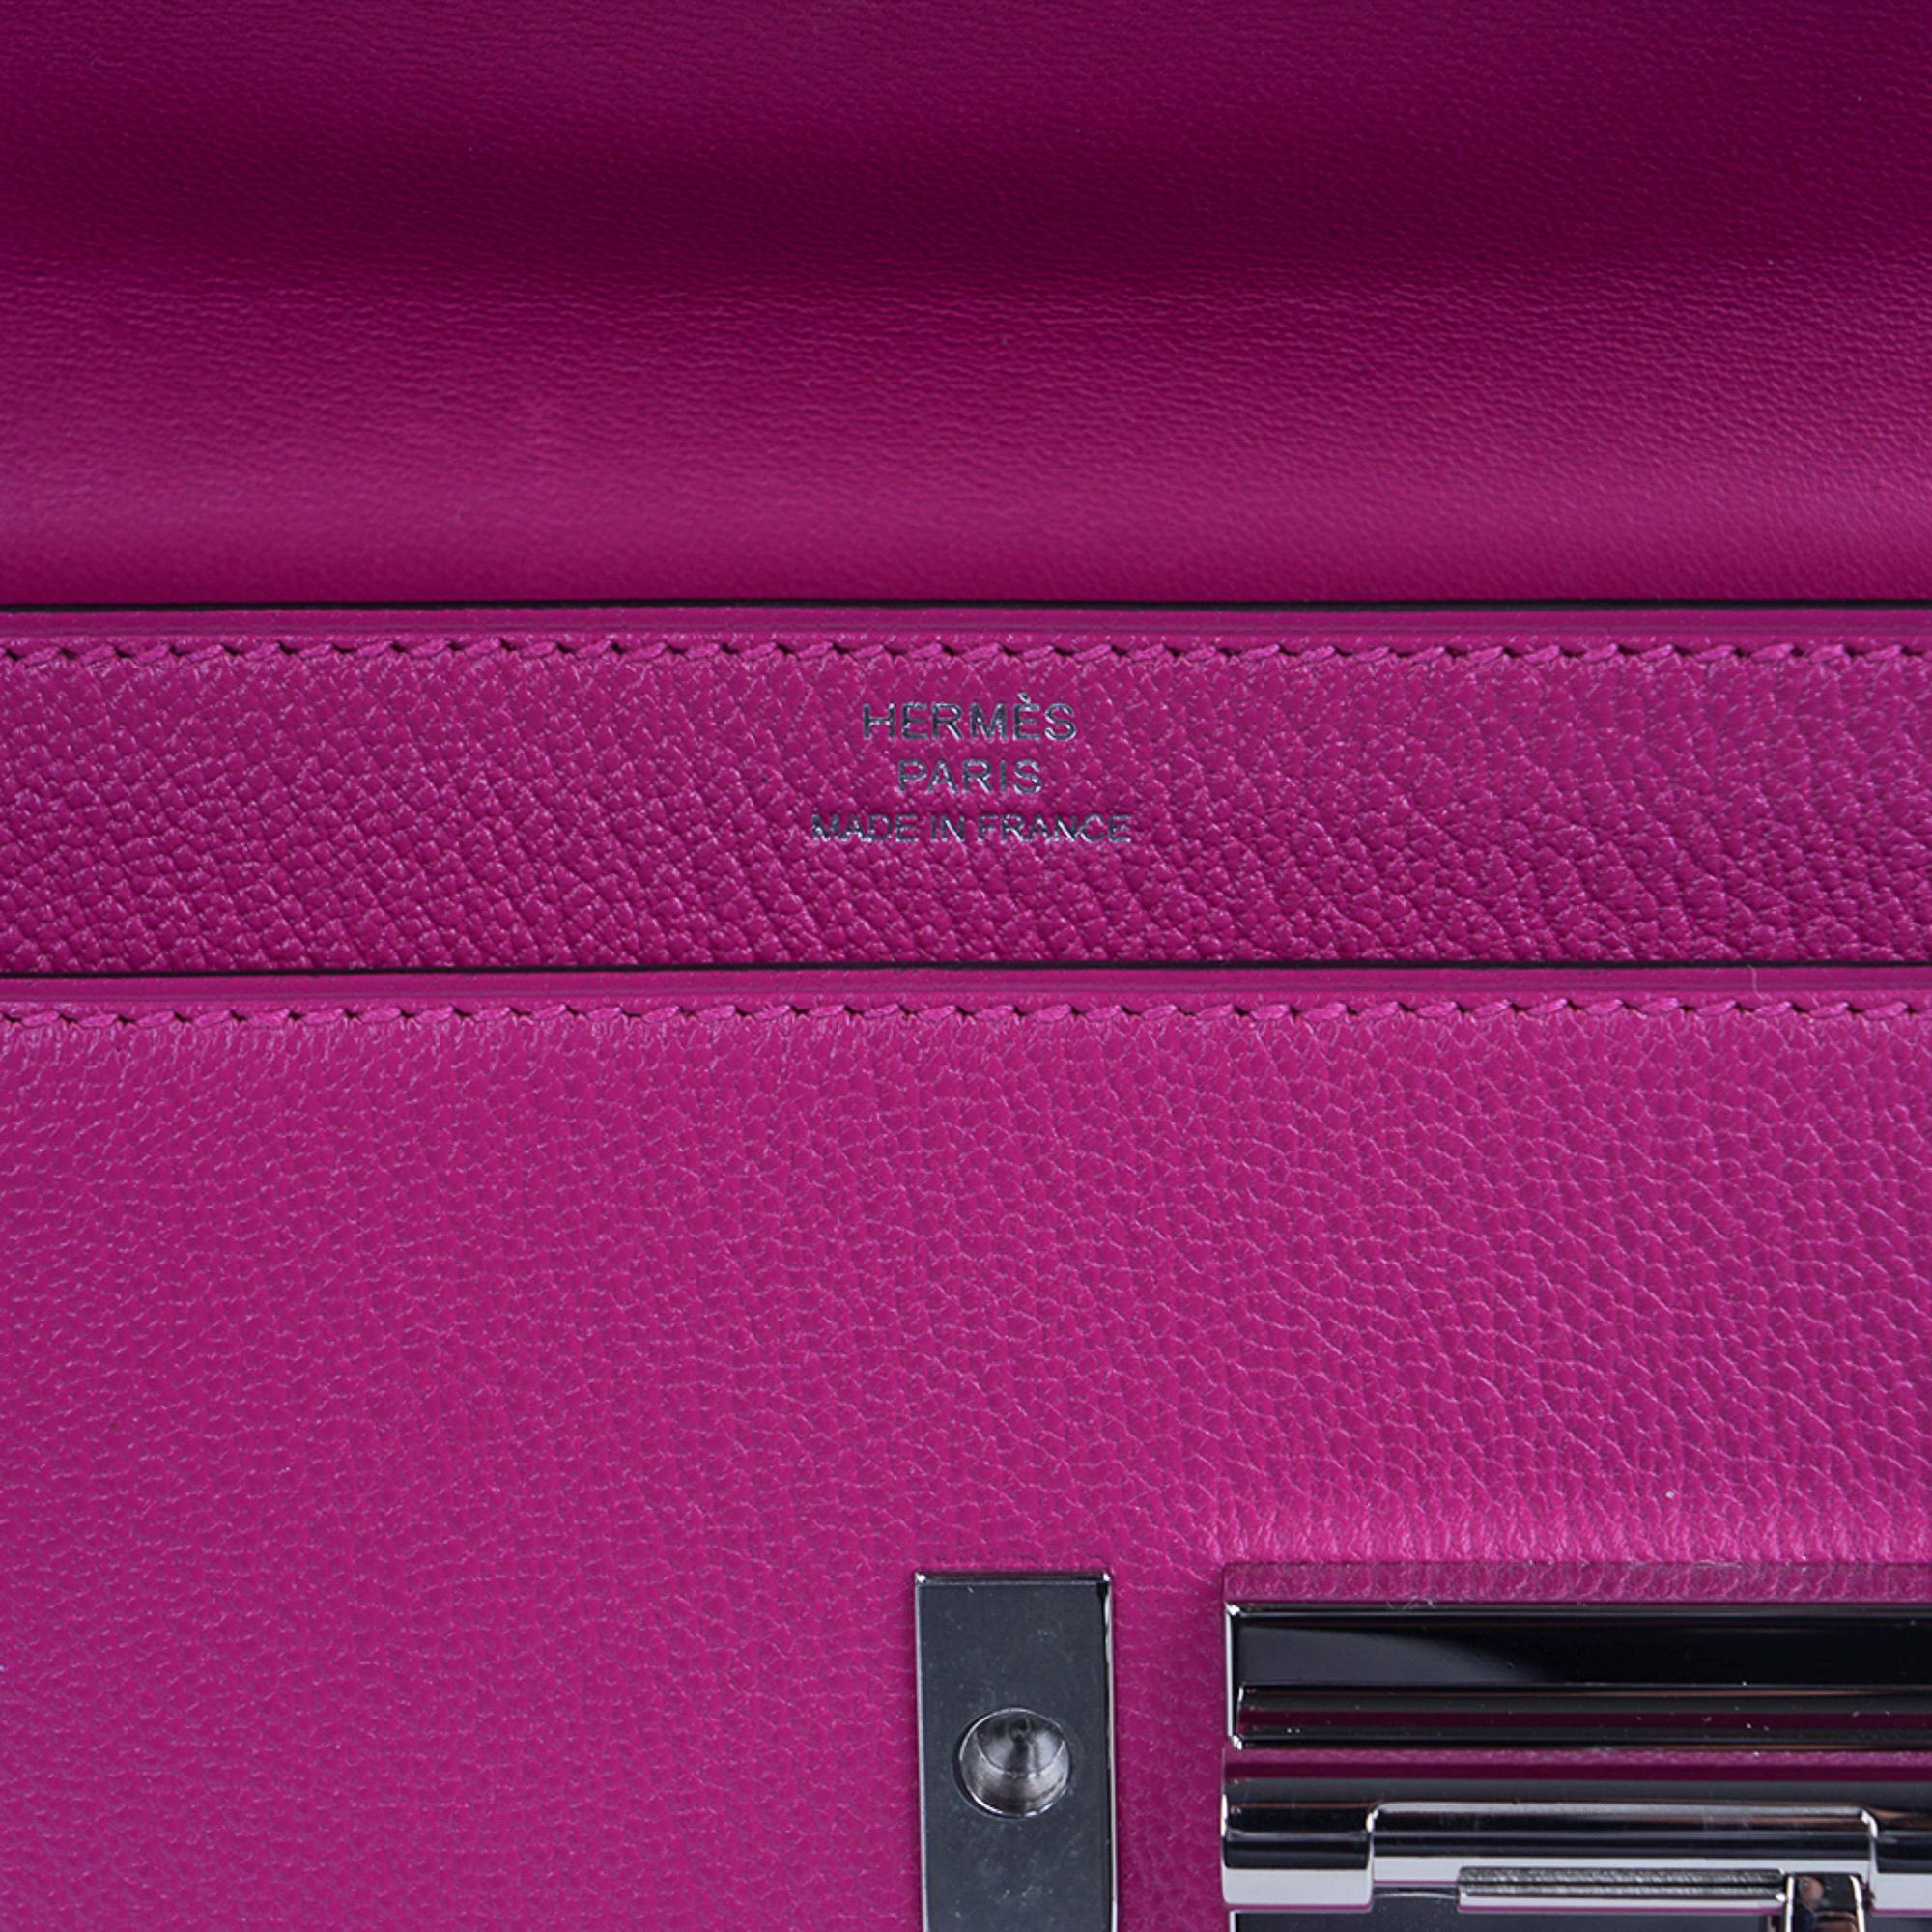 Hermes Mini Verrou Chaine Bag Rose Pourpre Chevre Leather 3